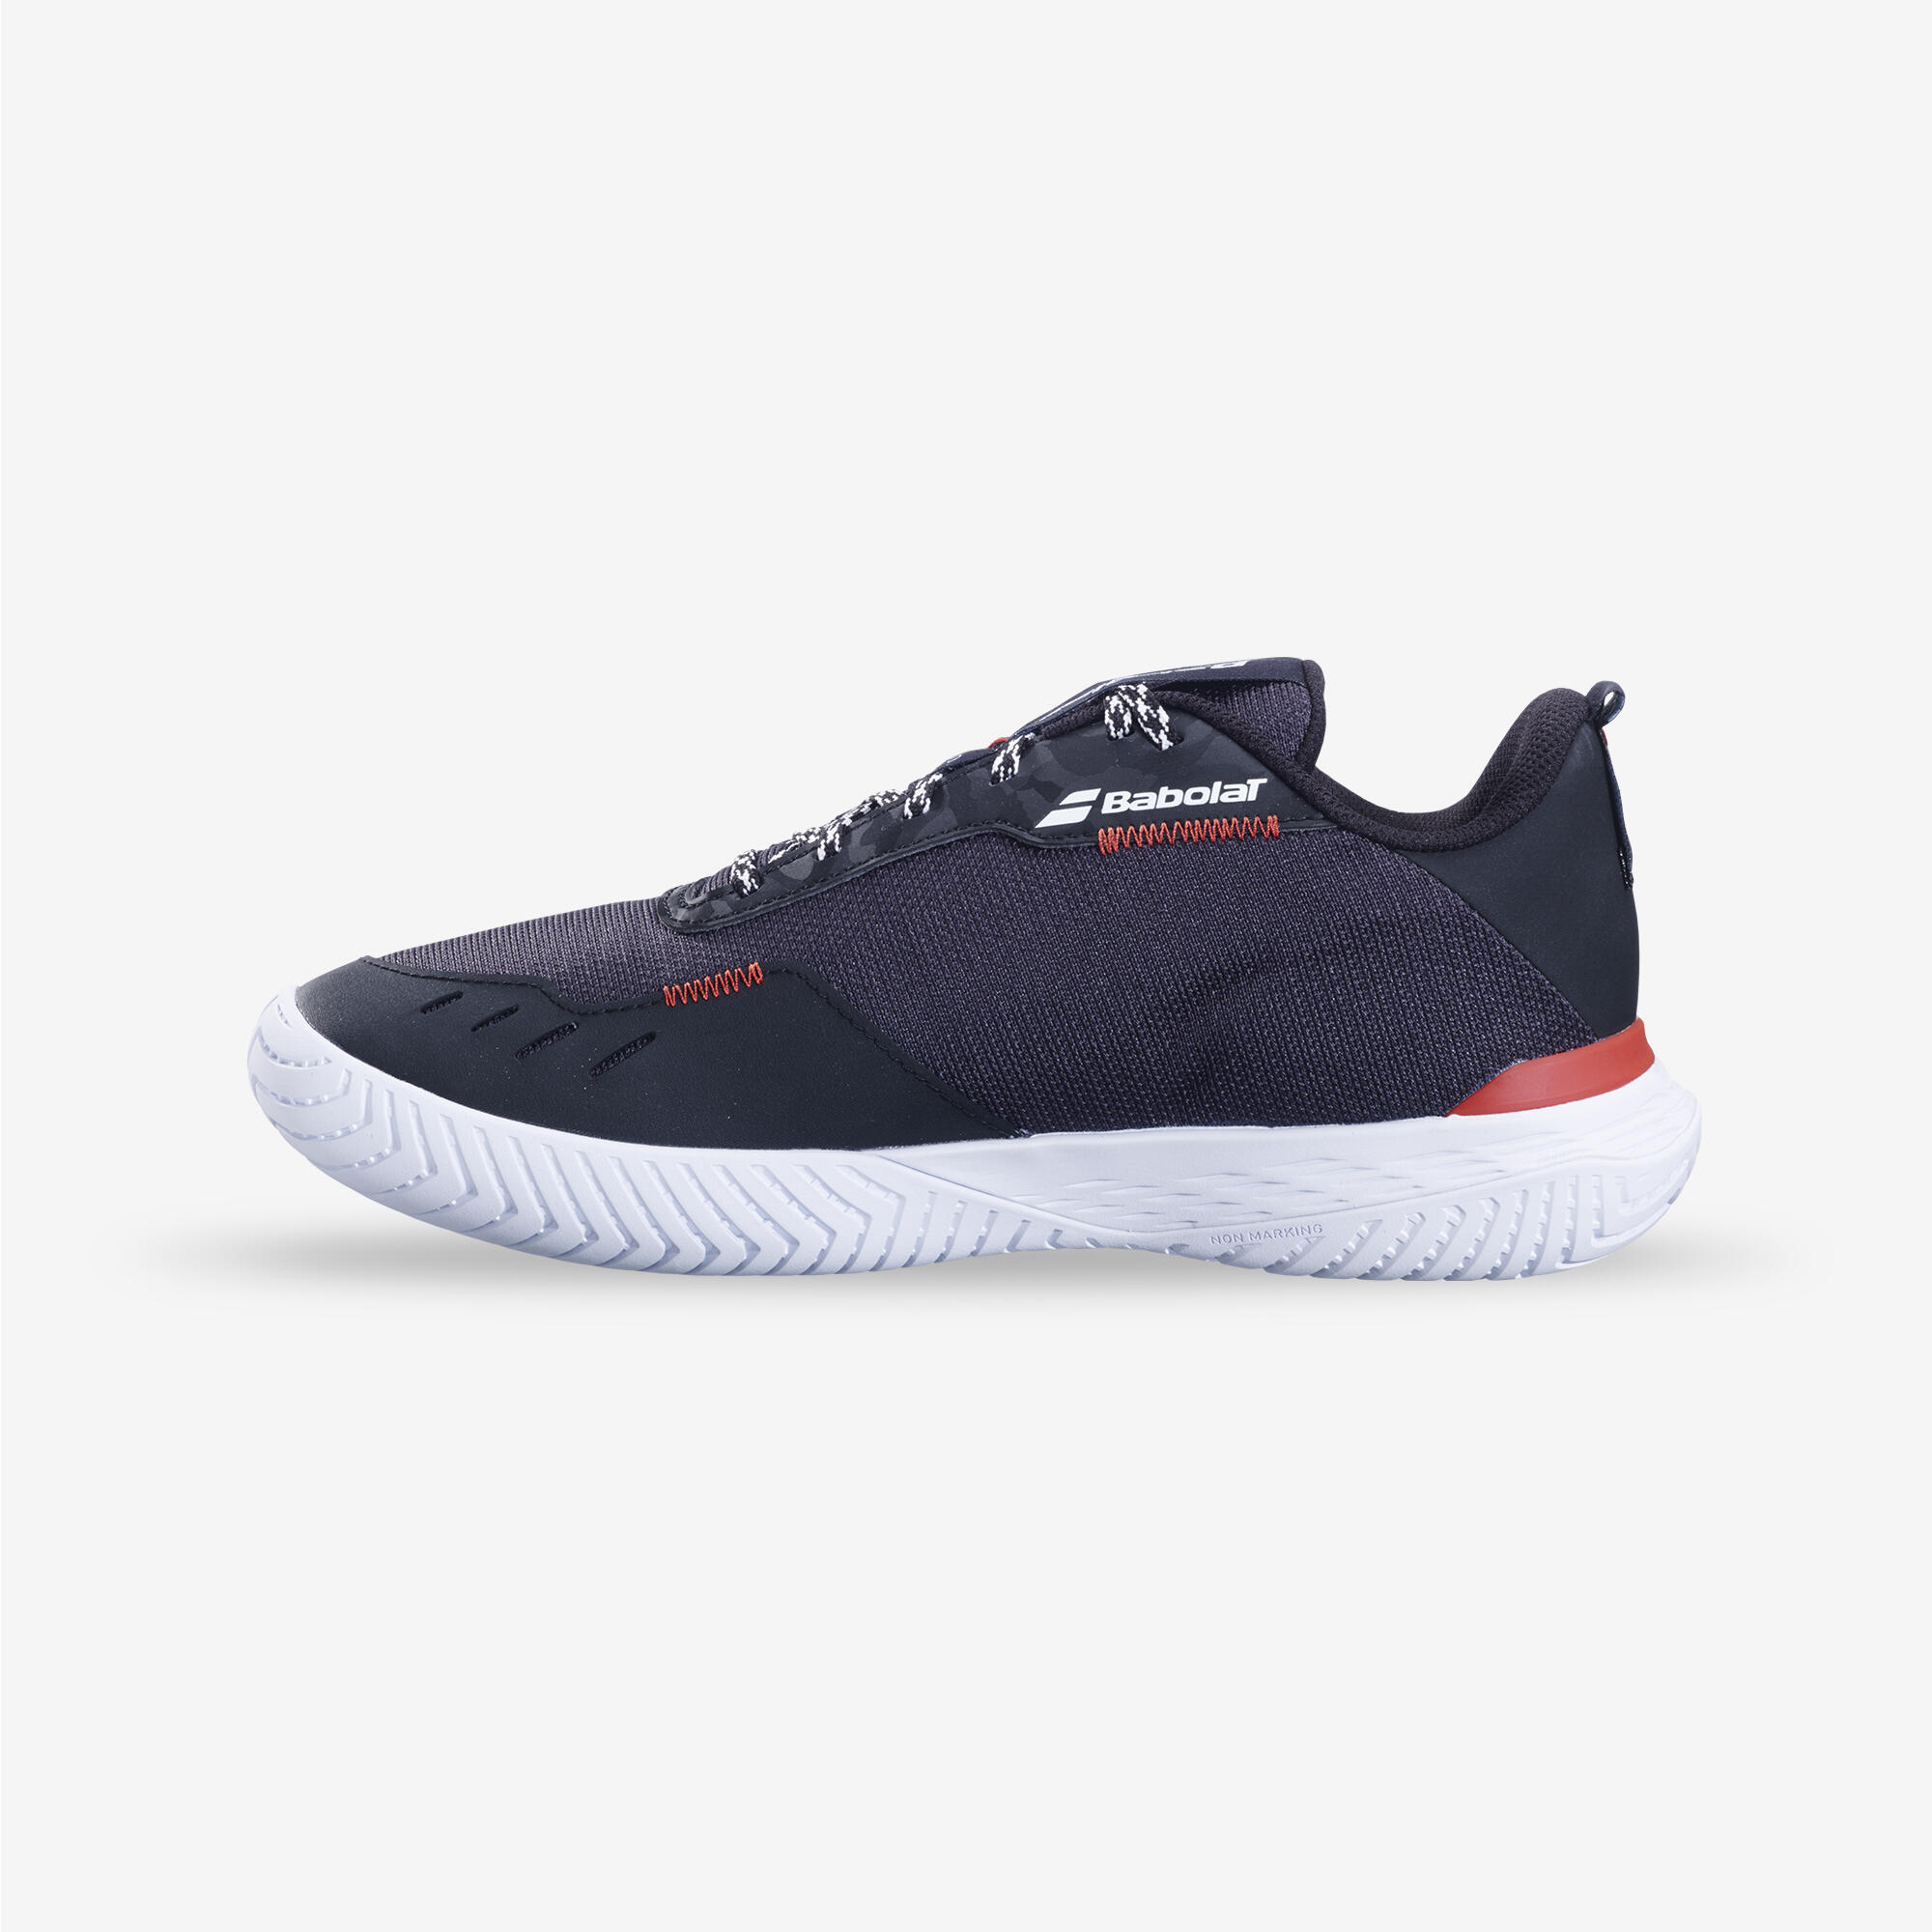 Men's Multicourt Tennis Shoes SFX EVO - Black/Red 2/5